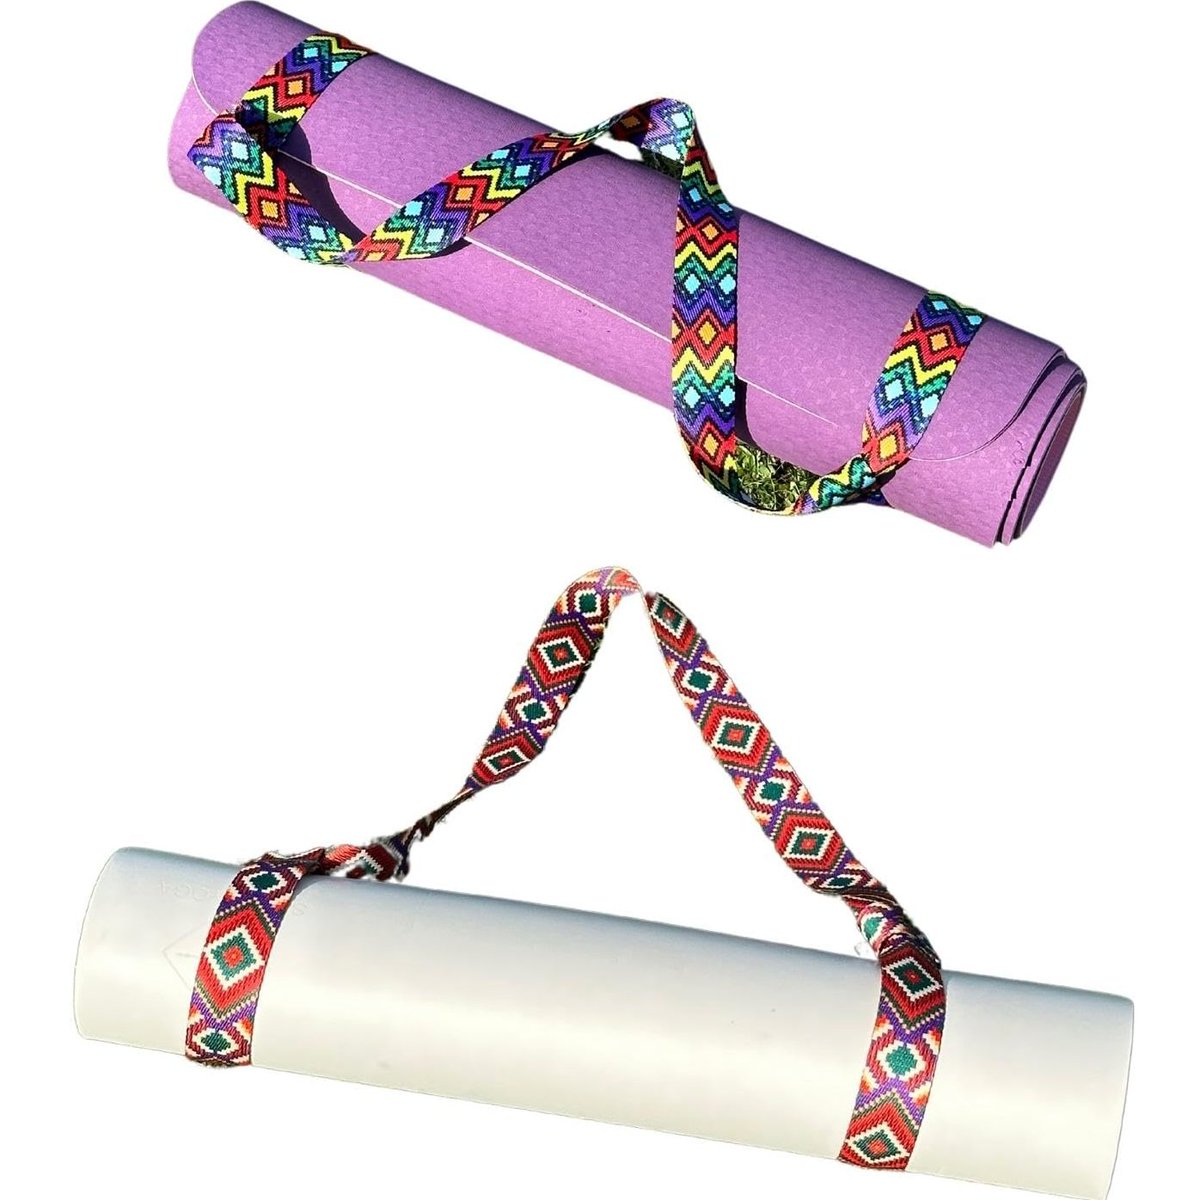 2 Pack Handmade Yoga Mat Strap, Handmade Yoga Mat Thick, Handmade Yoga Mat Carrier Strap, Handmade Yoga Mat Bag Strap | (Rainbow-Ethnic) amzn.to/4e868ka via @amazon #affiliate #yogaforbeginners